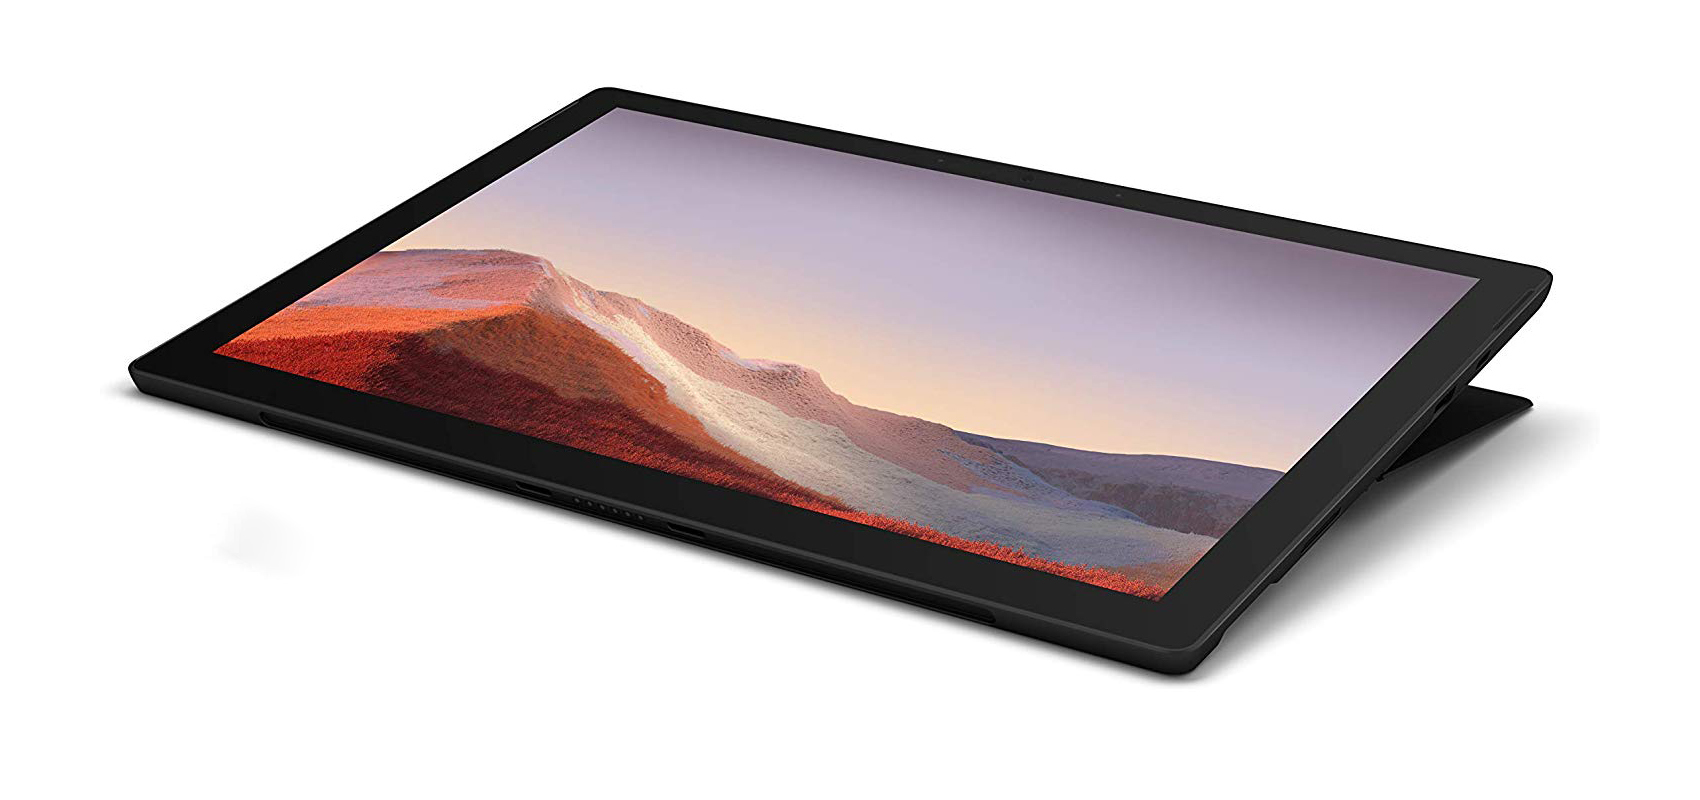 Microsoft Surface Pro 7 i7-1065G7/16GB/512GB SSD/Iris Plus/12.3-inch Pixel Sense/Windows 10/Black